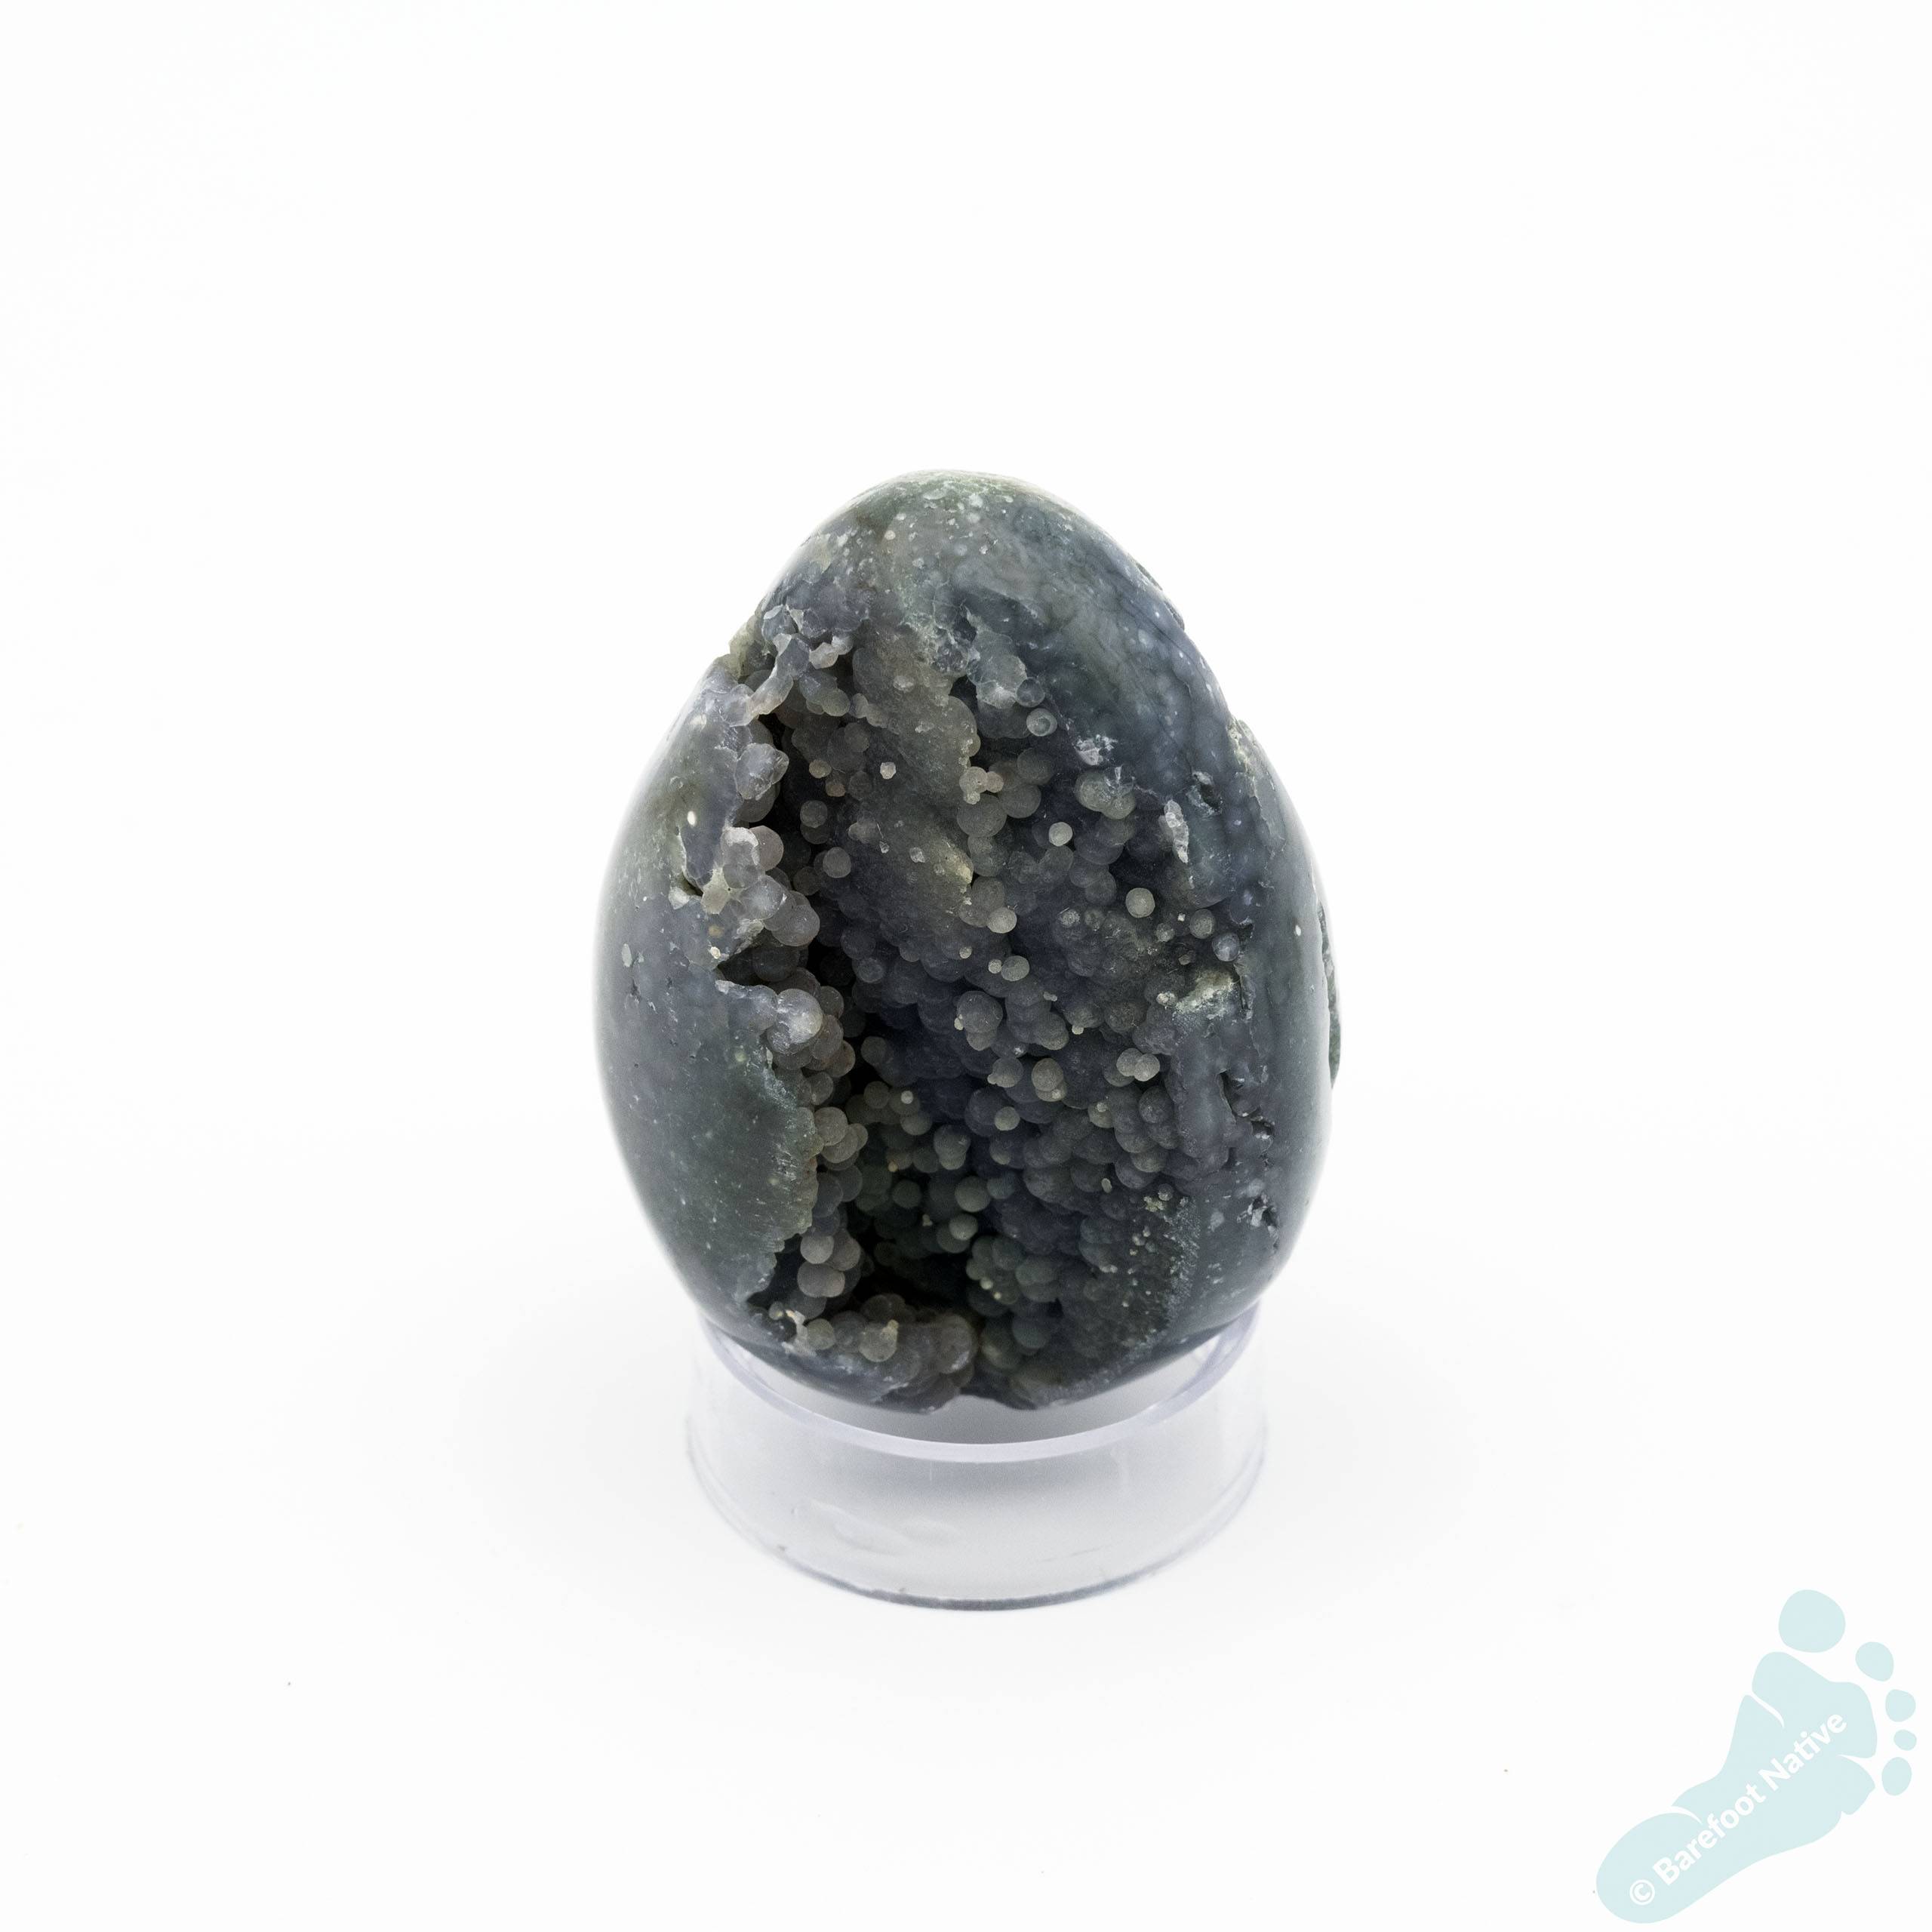 Grape Agate Geode Egg From Mamuju, Sulawesi Province, Indonesia- Botryoidal Amethystine Microcrystalline Quartz Chalcedony 119